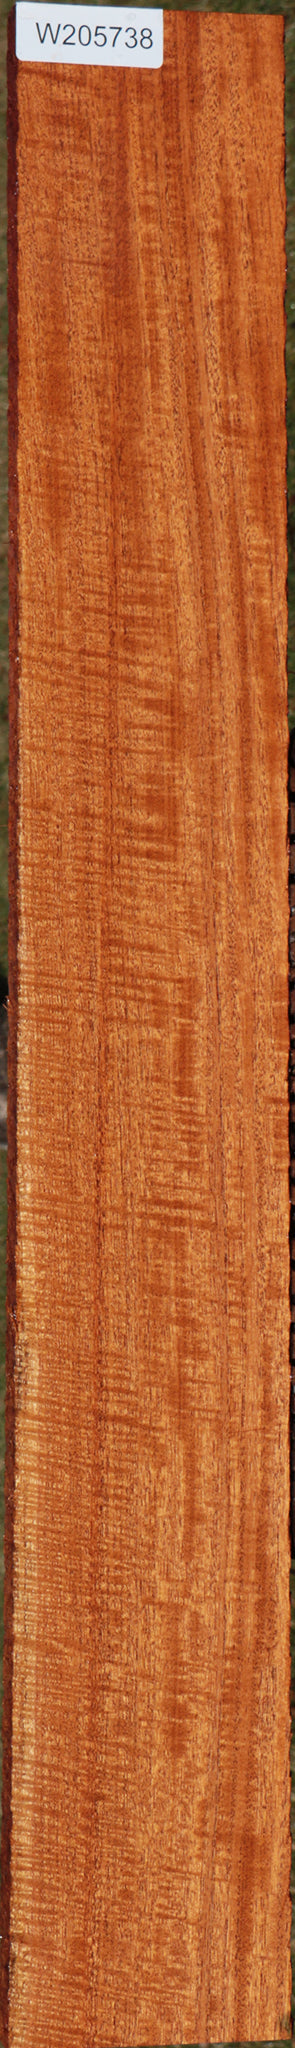 Quartersawn Honduras Mahogany Lumber